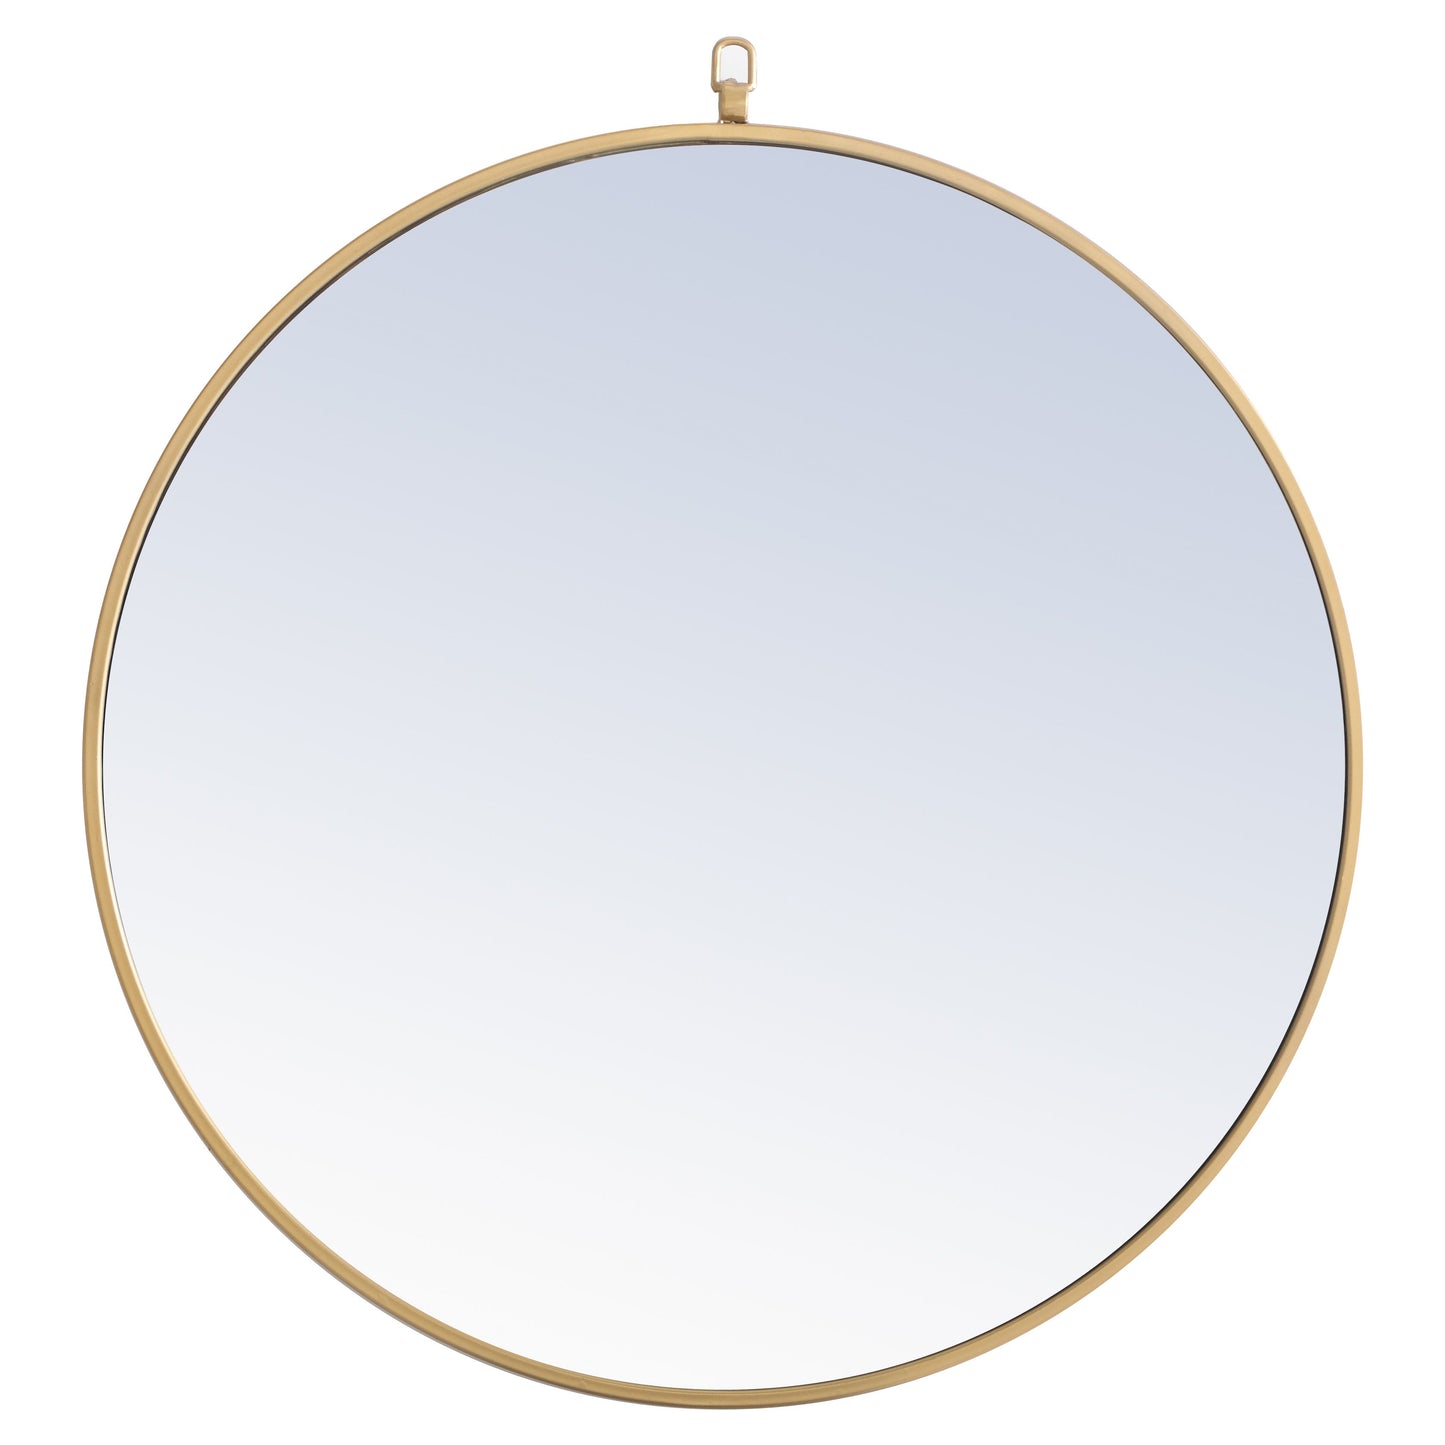 MR4055BR Rowan 28" x 28" Metal Framed Round Mirror with Decorative Hook in Brass